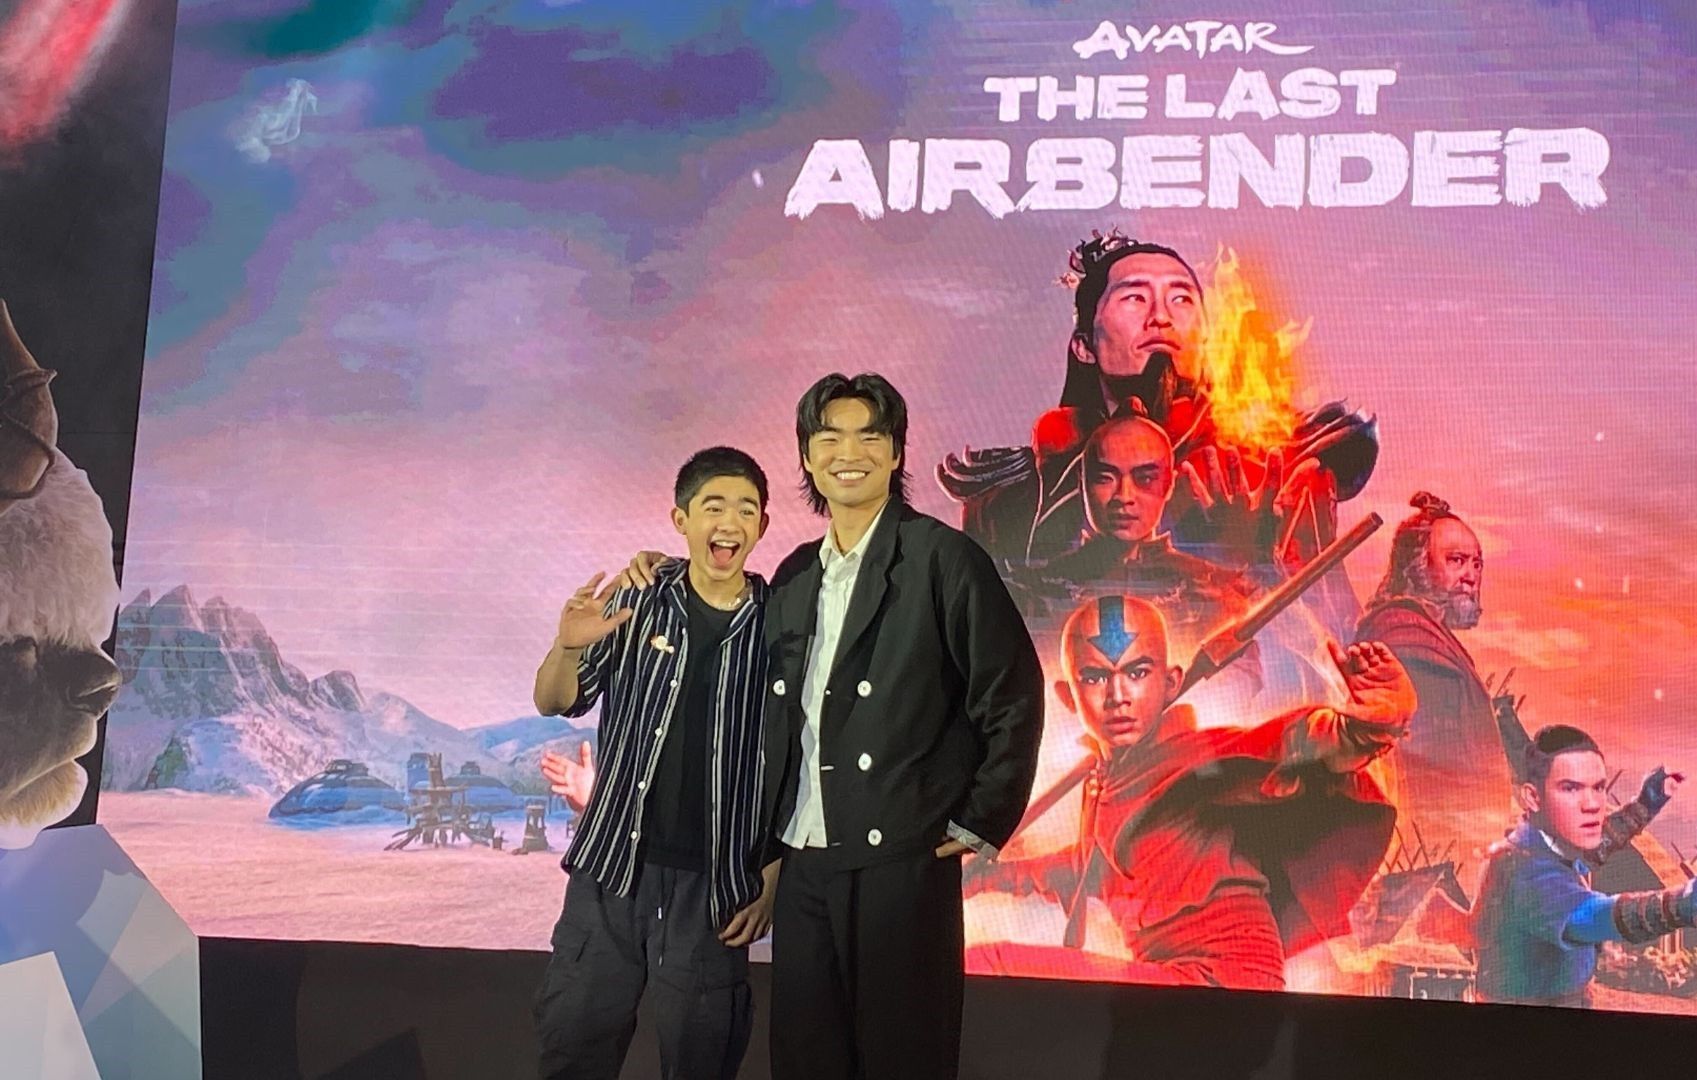 Filipino-Canadian Gordon Cormier shares favorite 'Avatar' moments, becoming Aang